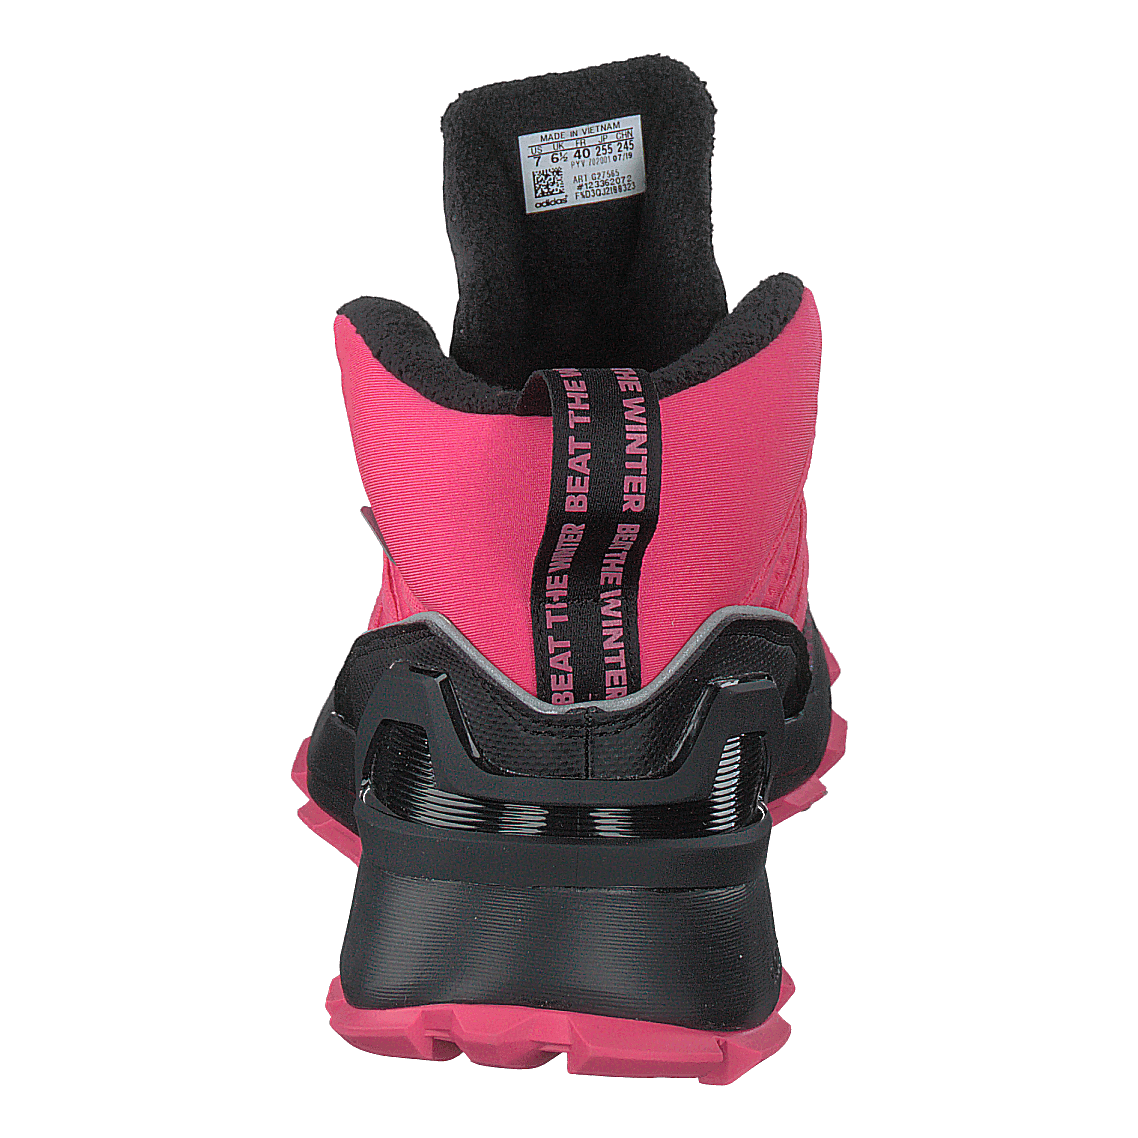 RapidaRun ATR Shoes Core Black / Real Magenta / Real Pink